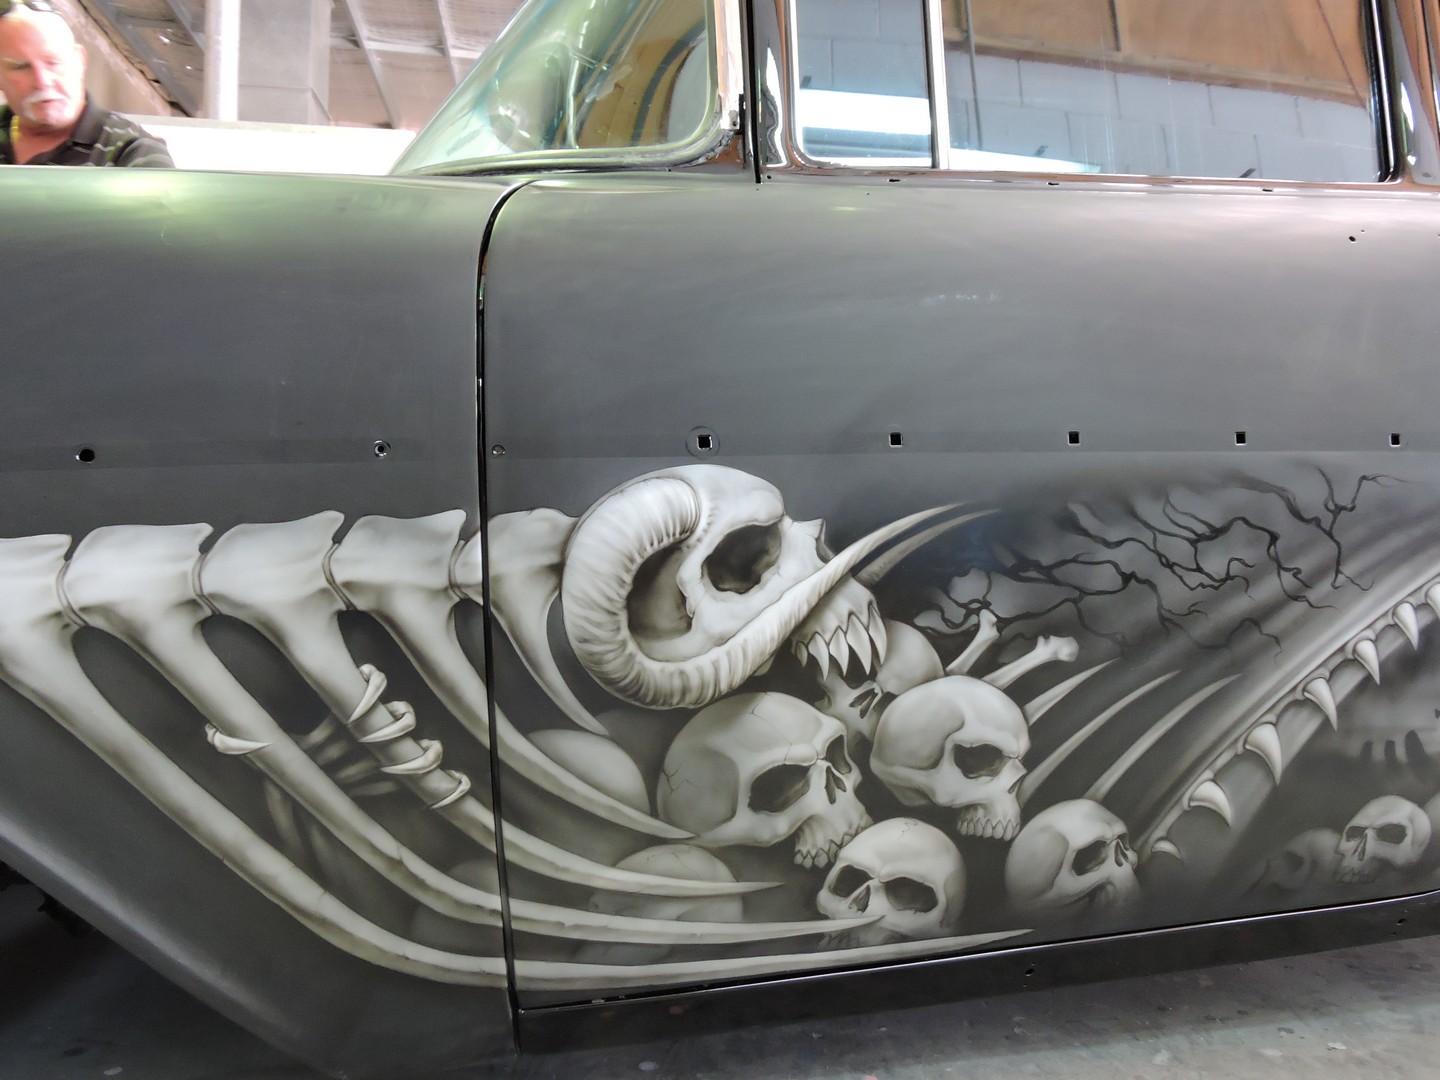 &apos;56 Chevy - Skull Graphics